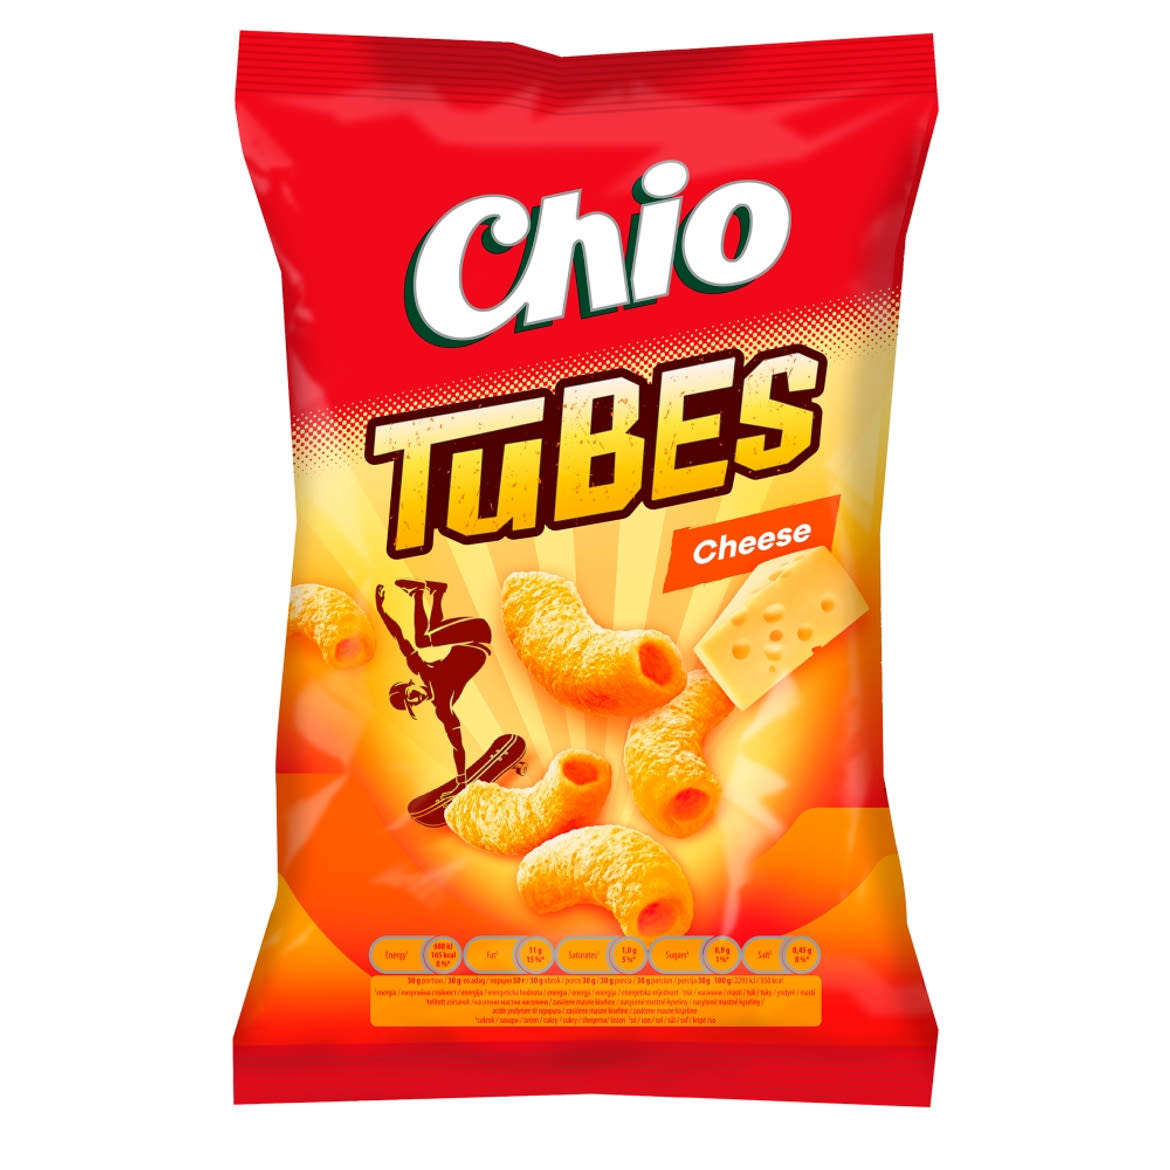 Chio Tubes sajtos kukoricasnack